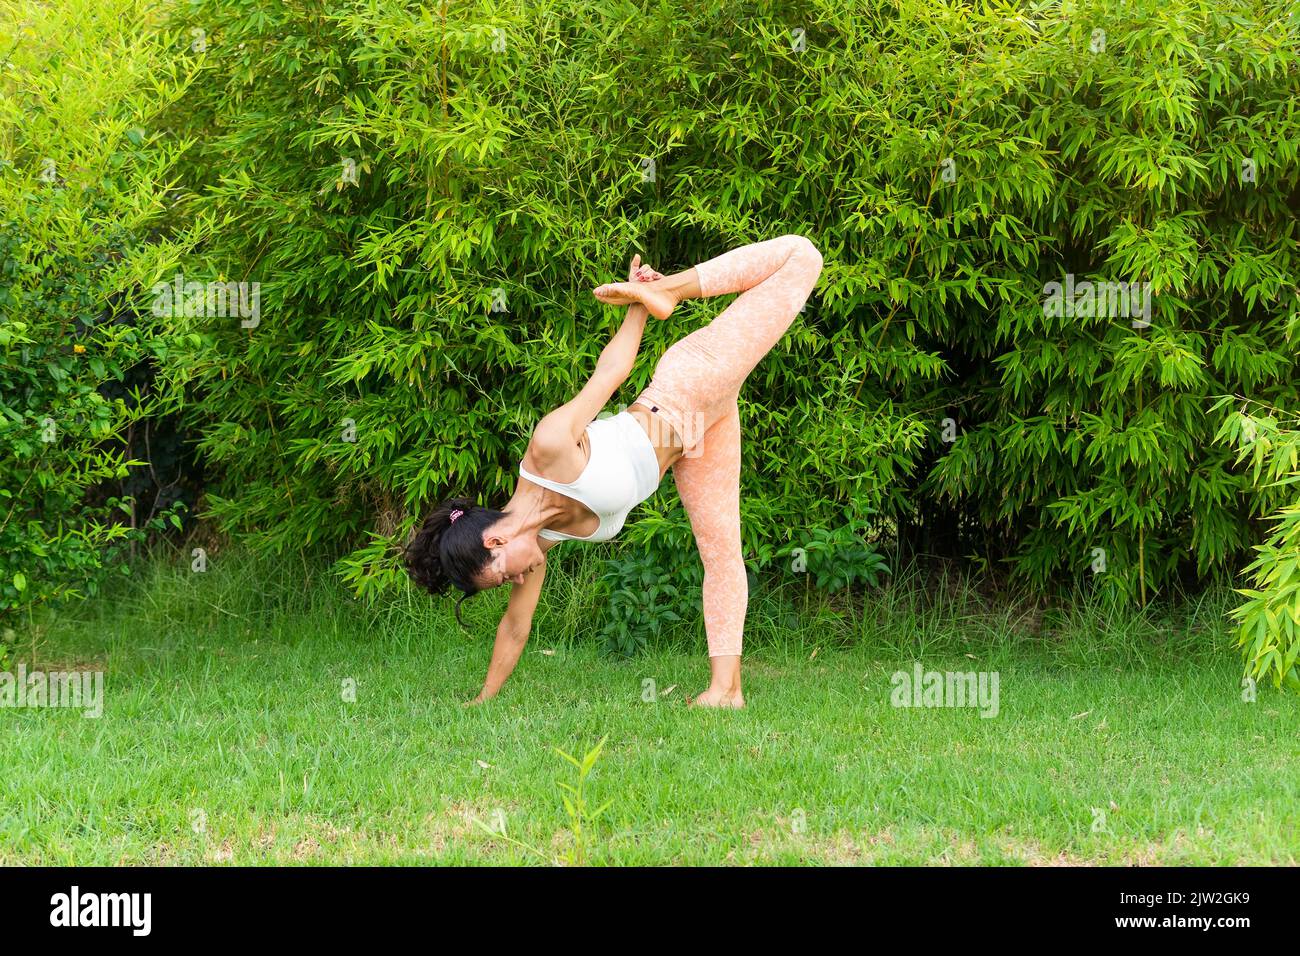 Fit woman doing ardha chandra chapasana yoga pose Stock Photo by